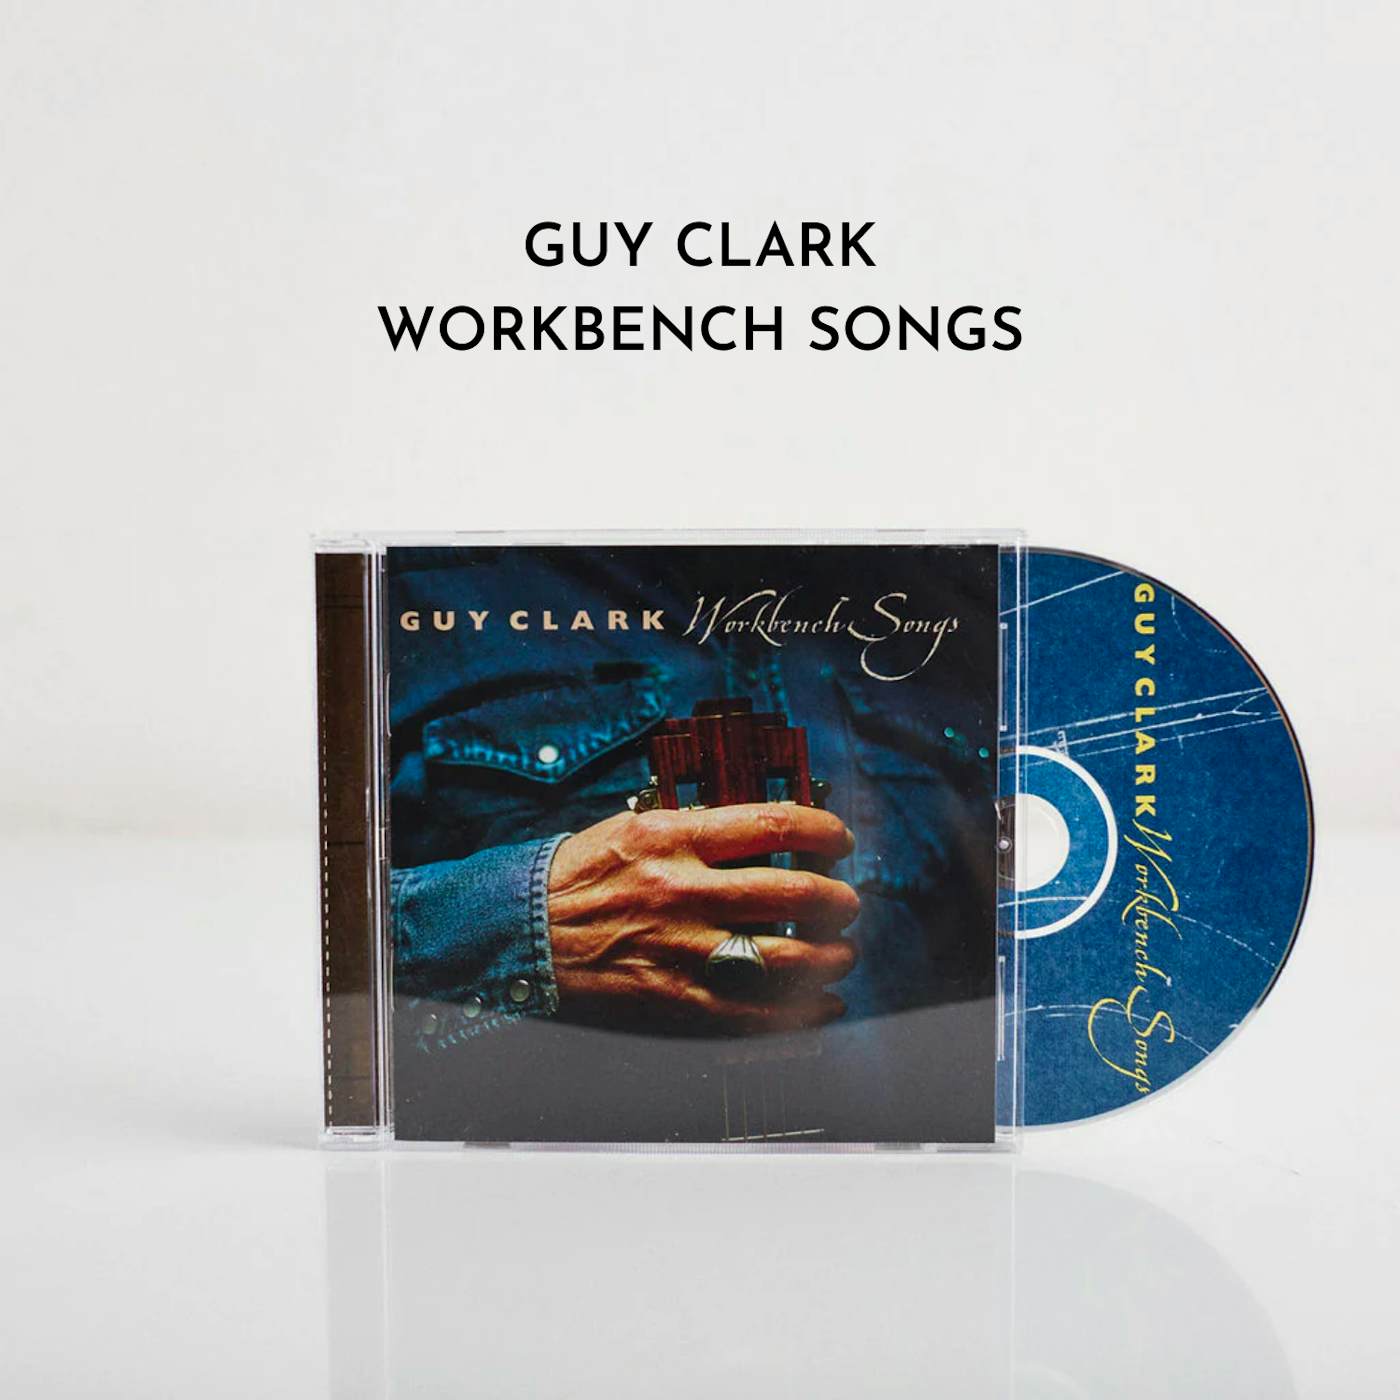 Guy Clark Workbench Songs (CD)